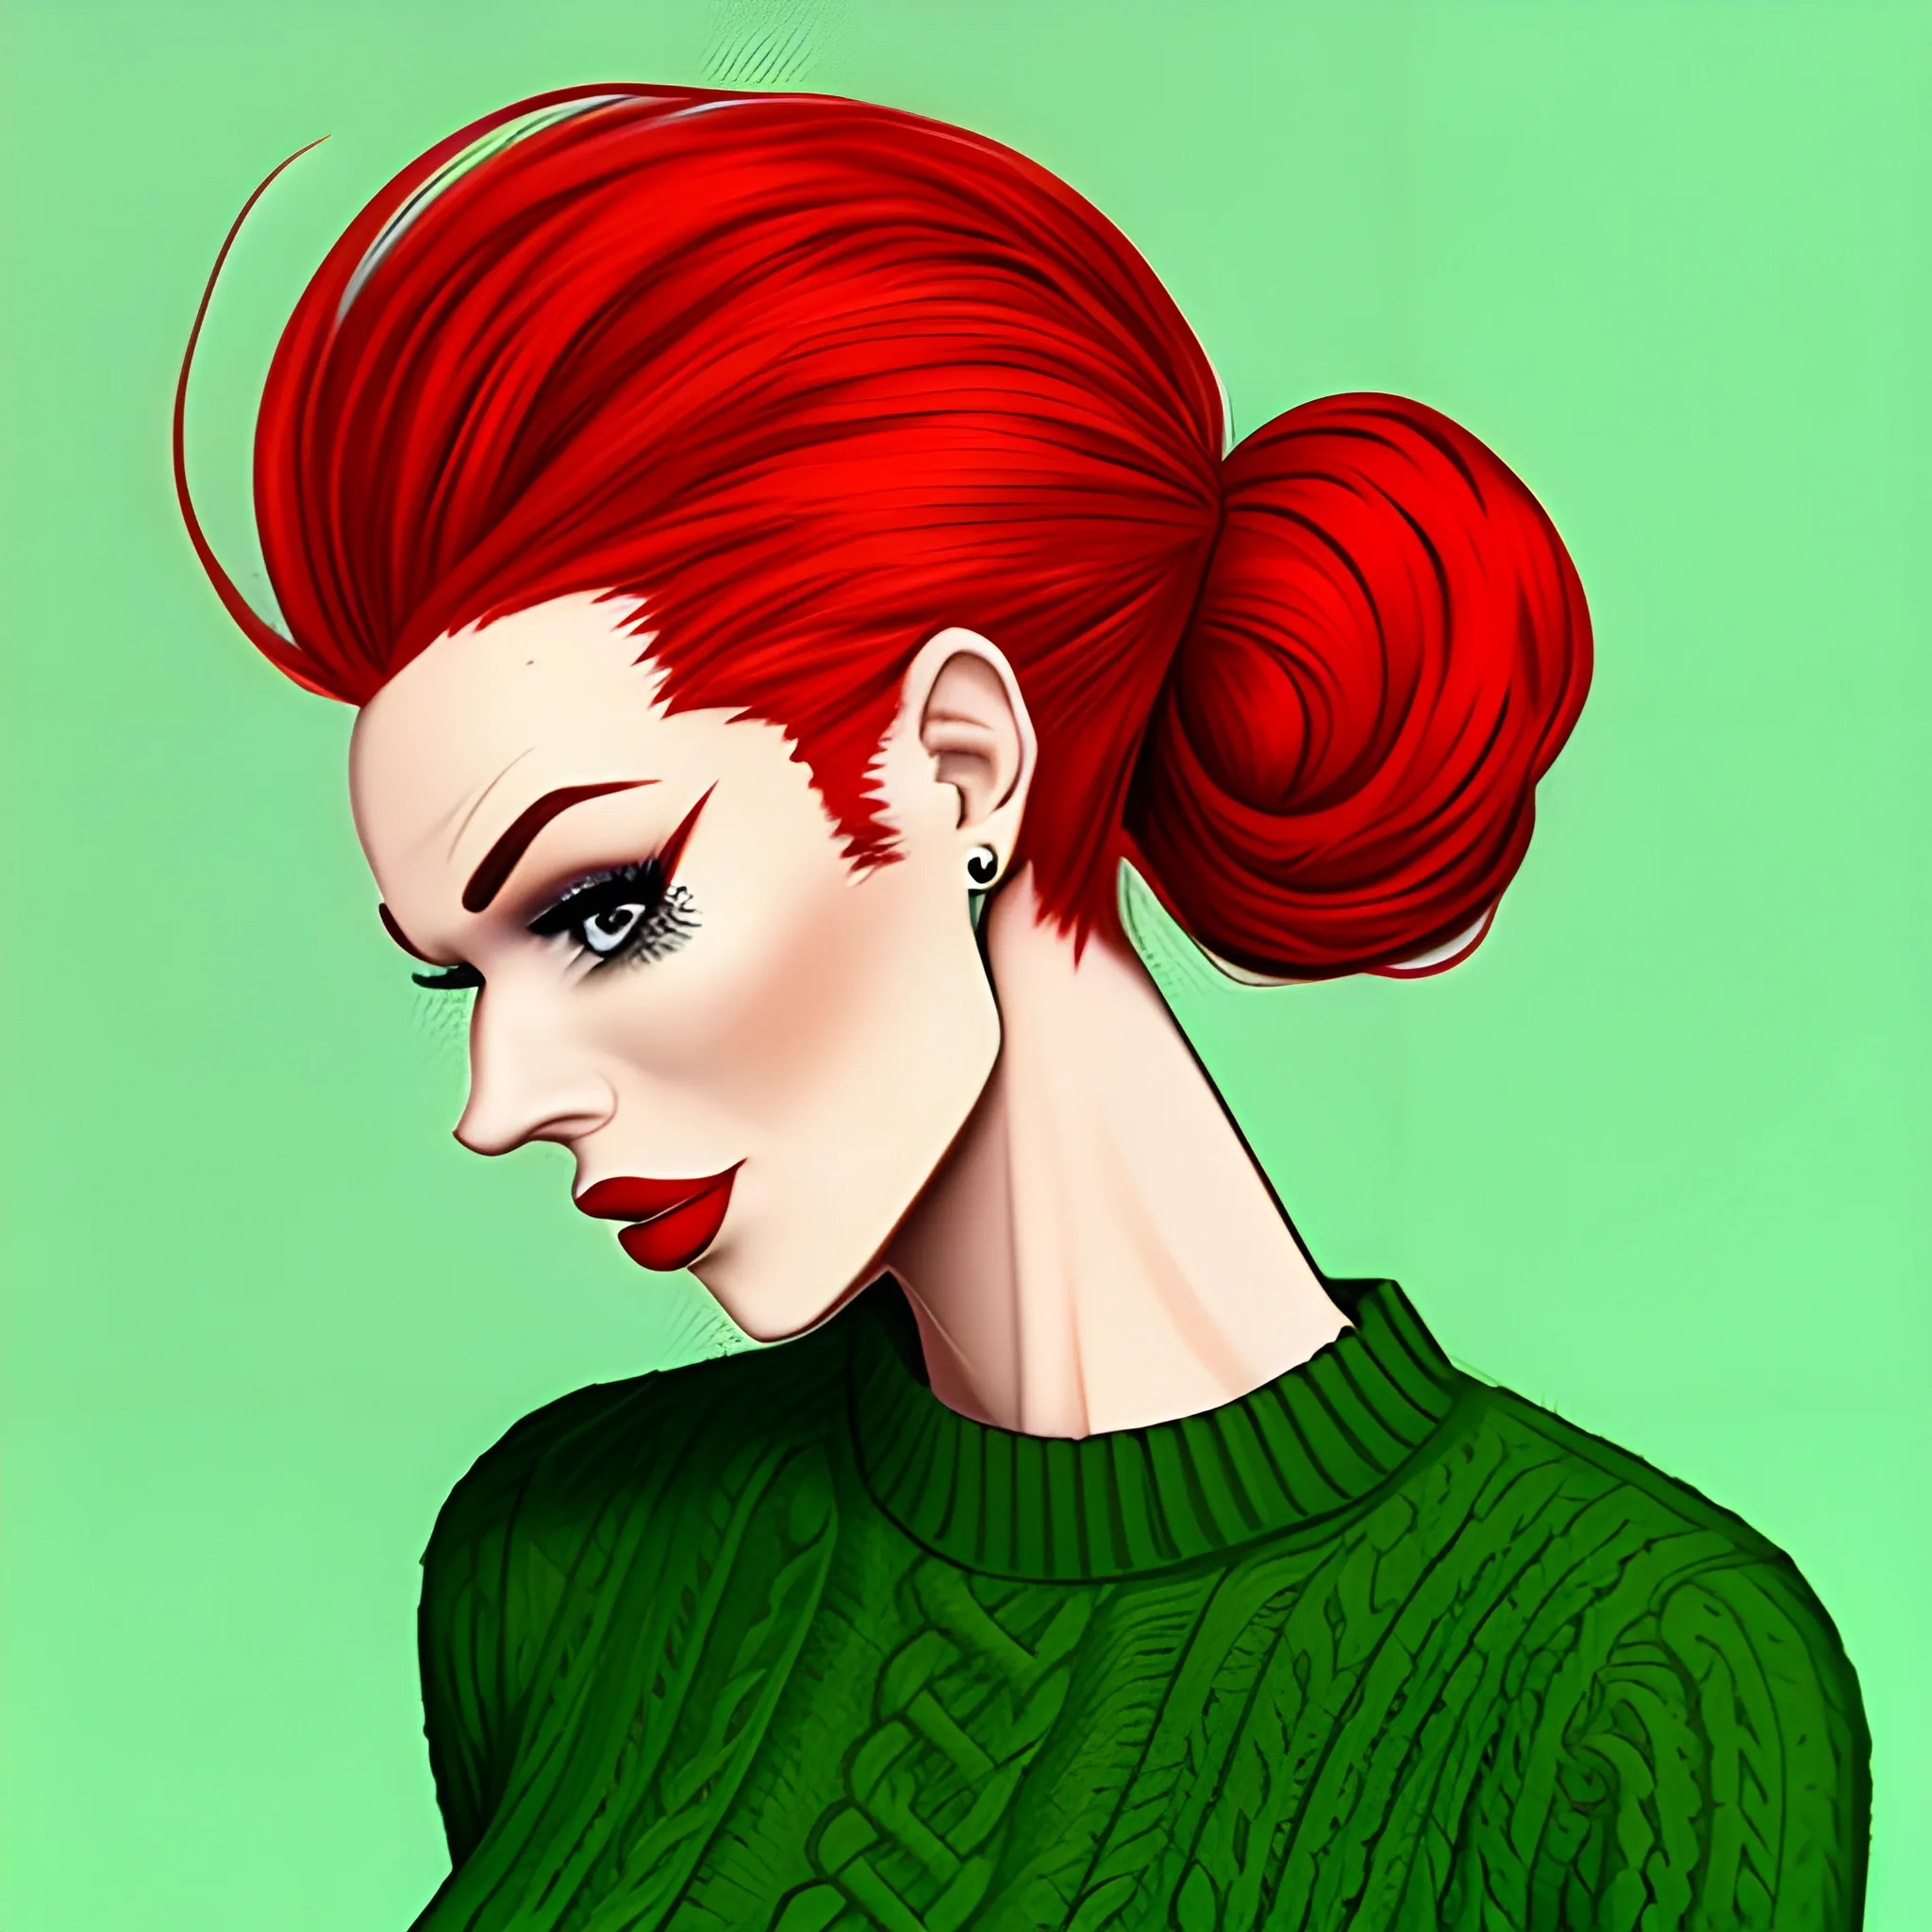 cartoon girl, red hair with messy bun, wearing green sweater